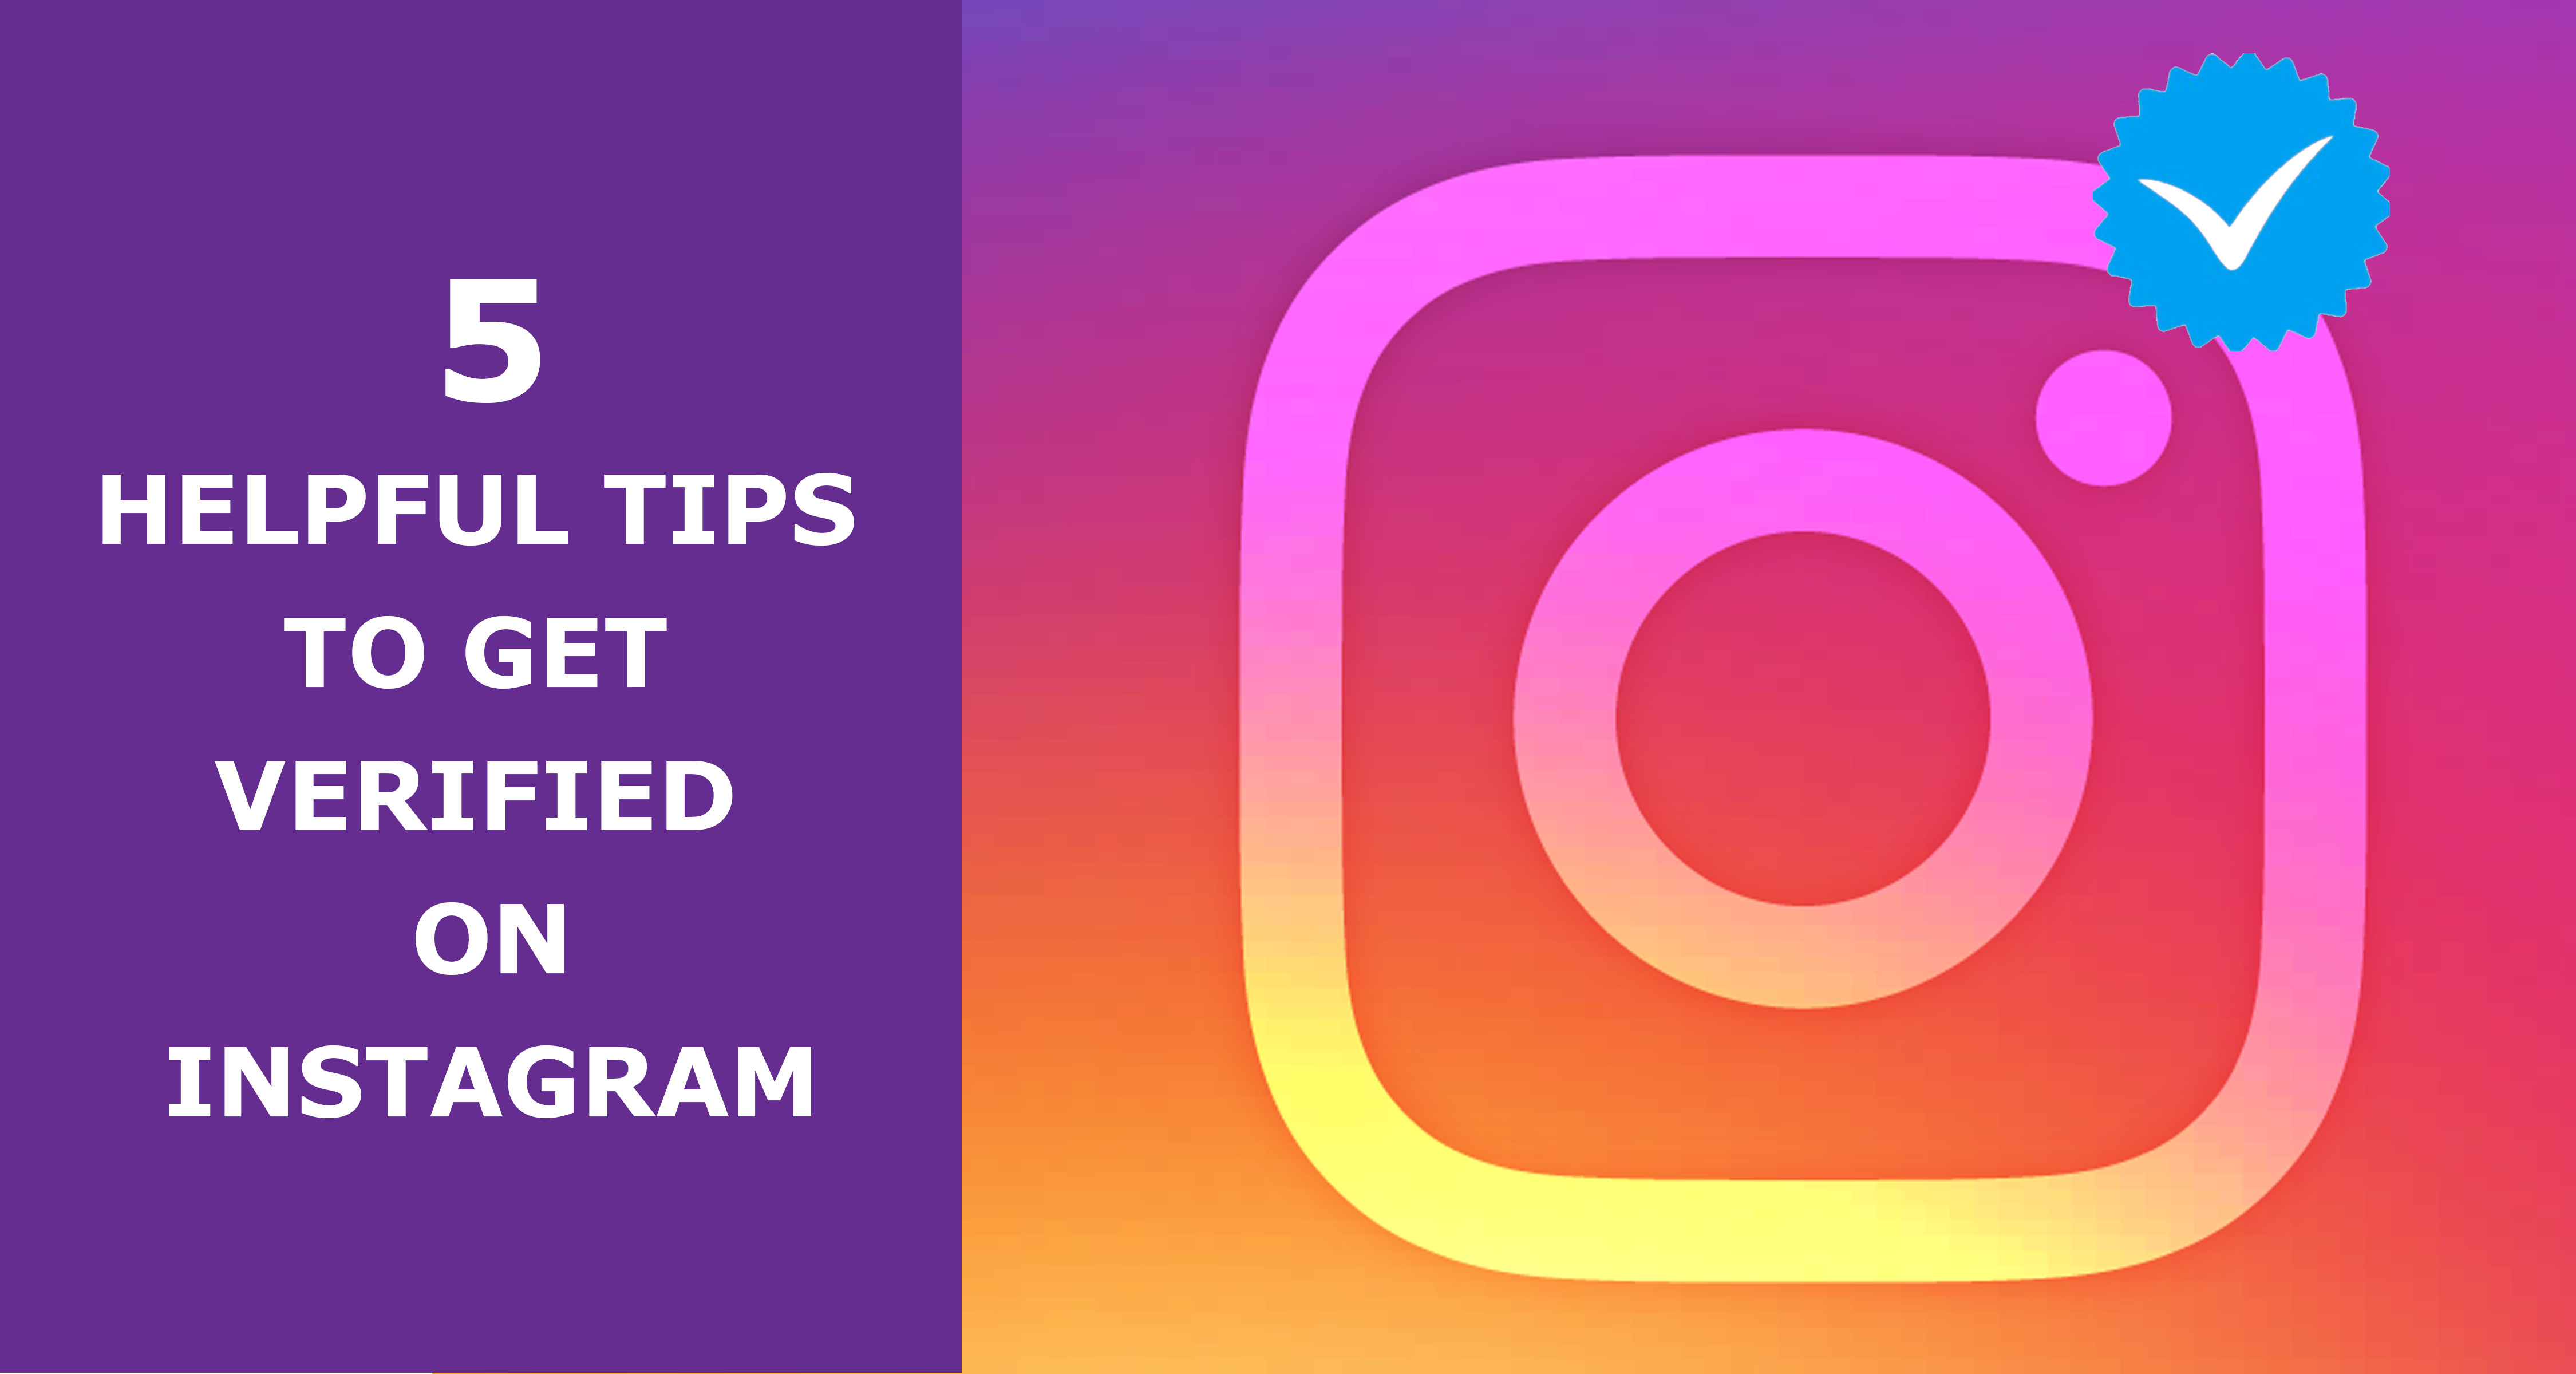 5 Helpful Tips To Get Verified On Instagram